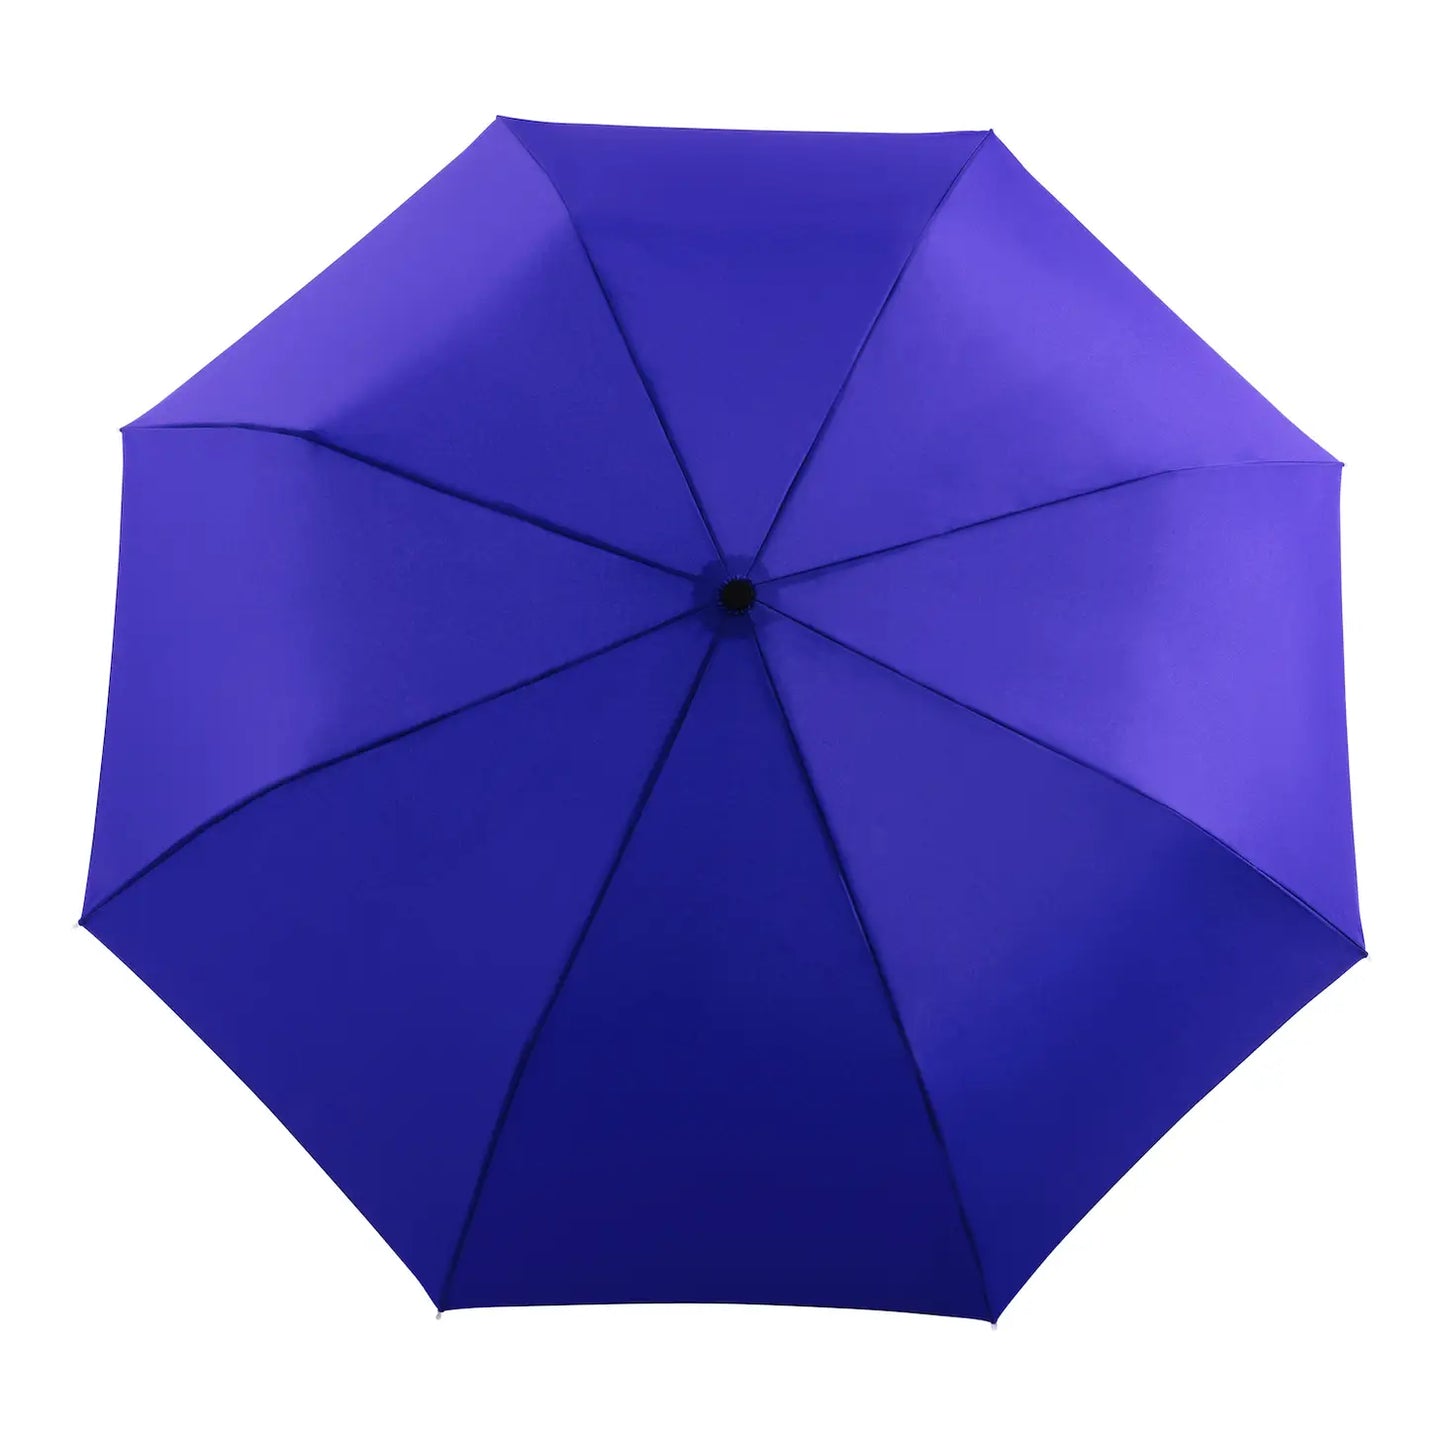 Royal Blue Compact Eco-Friendly Wind Resistant Umbrella